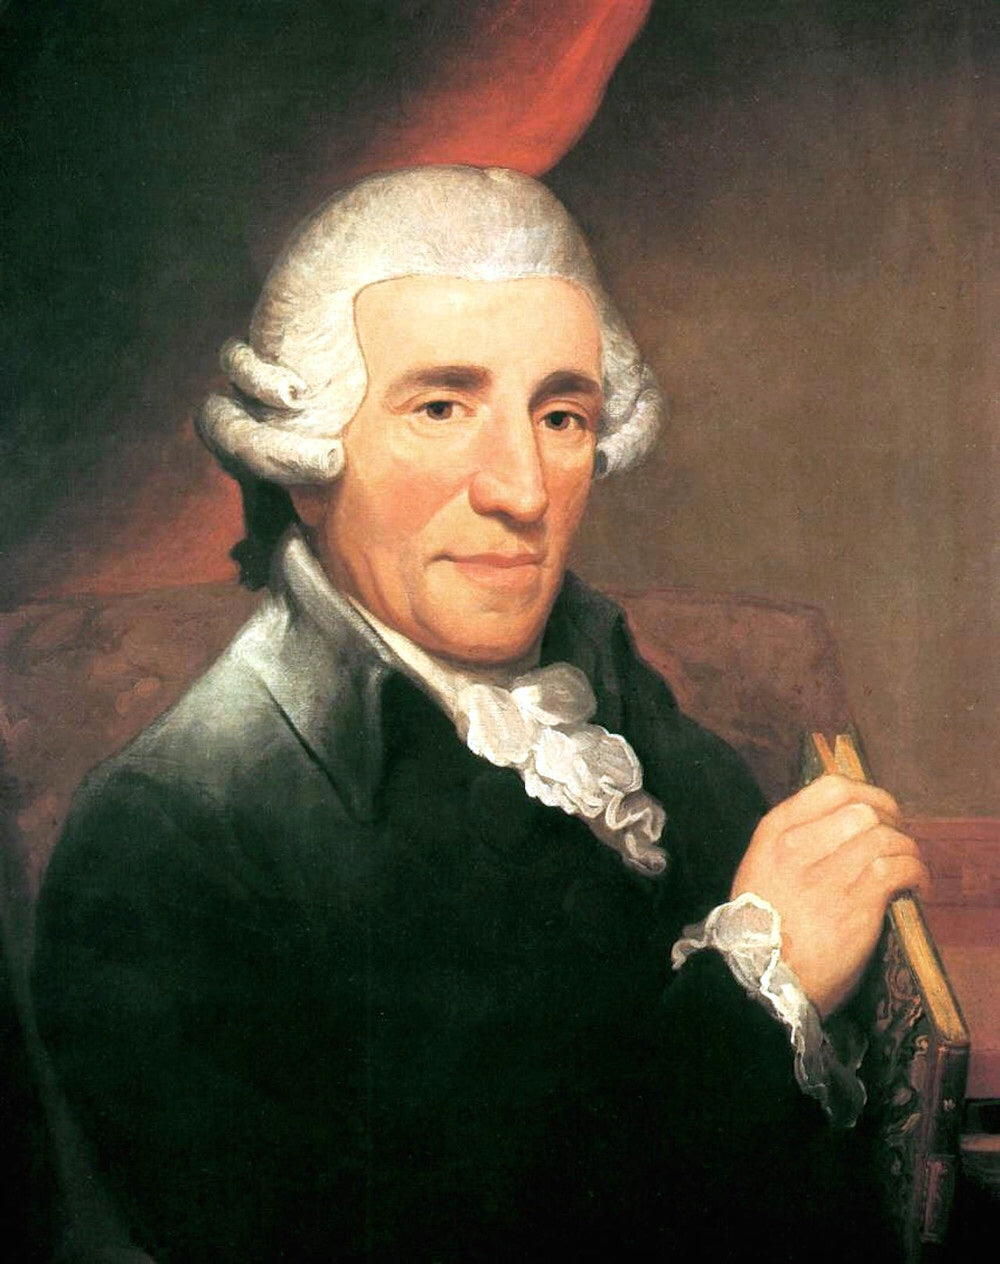 De Atramentis Franz Joseph Haydn Pacific Blue